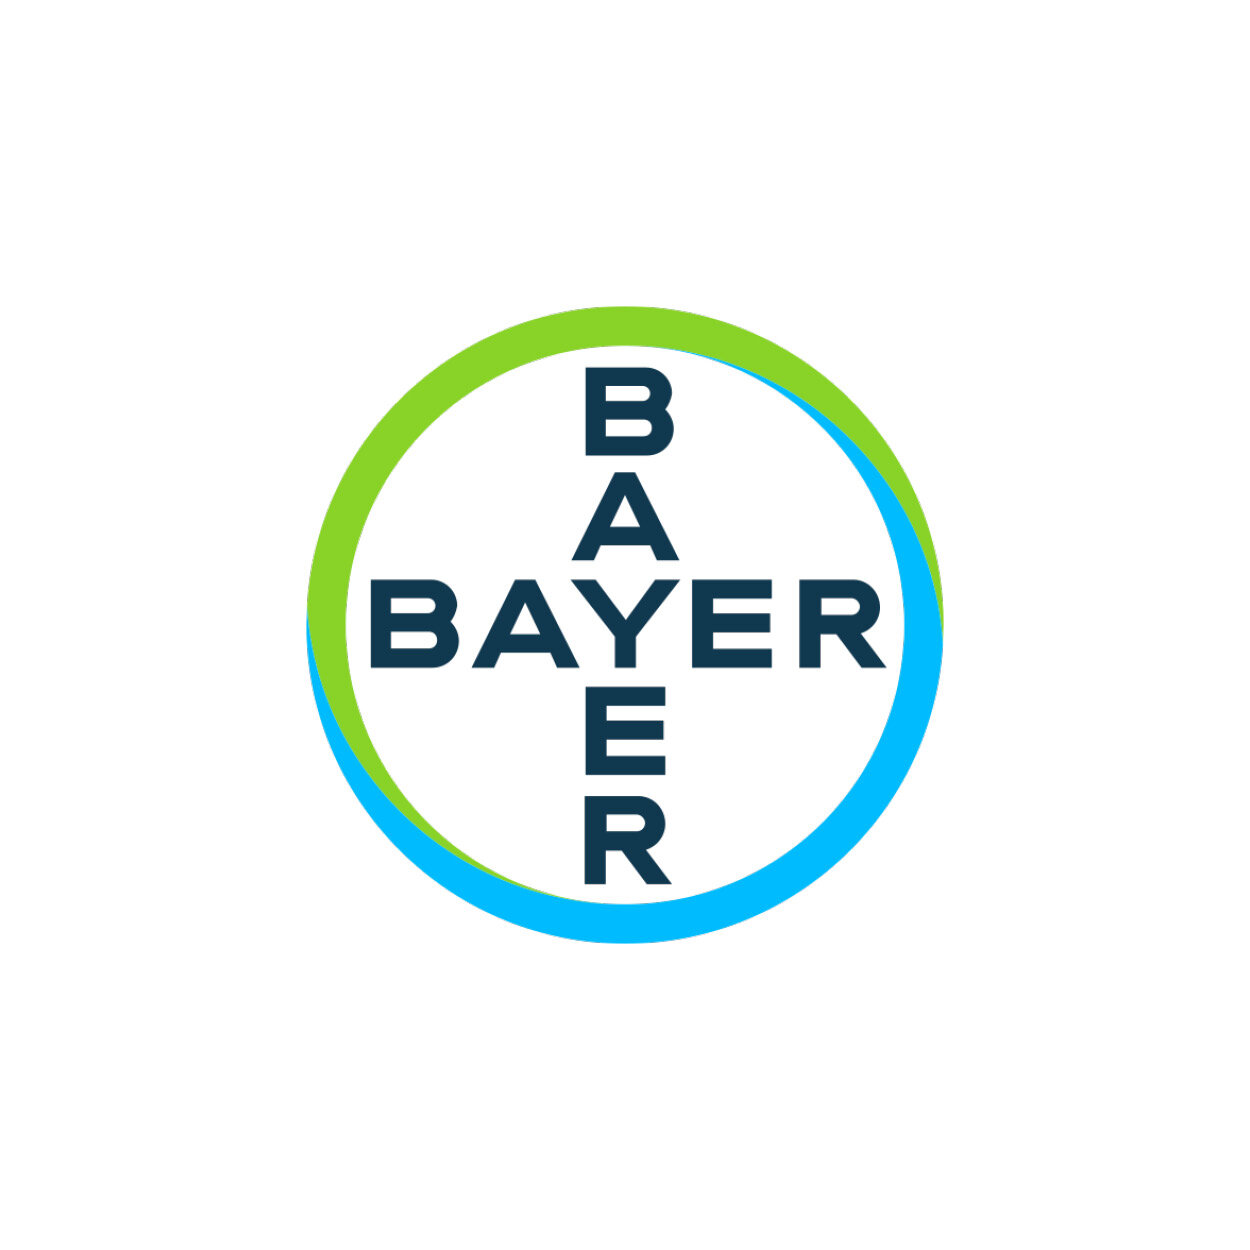 logo-bayer.jpg